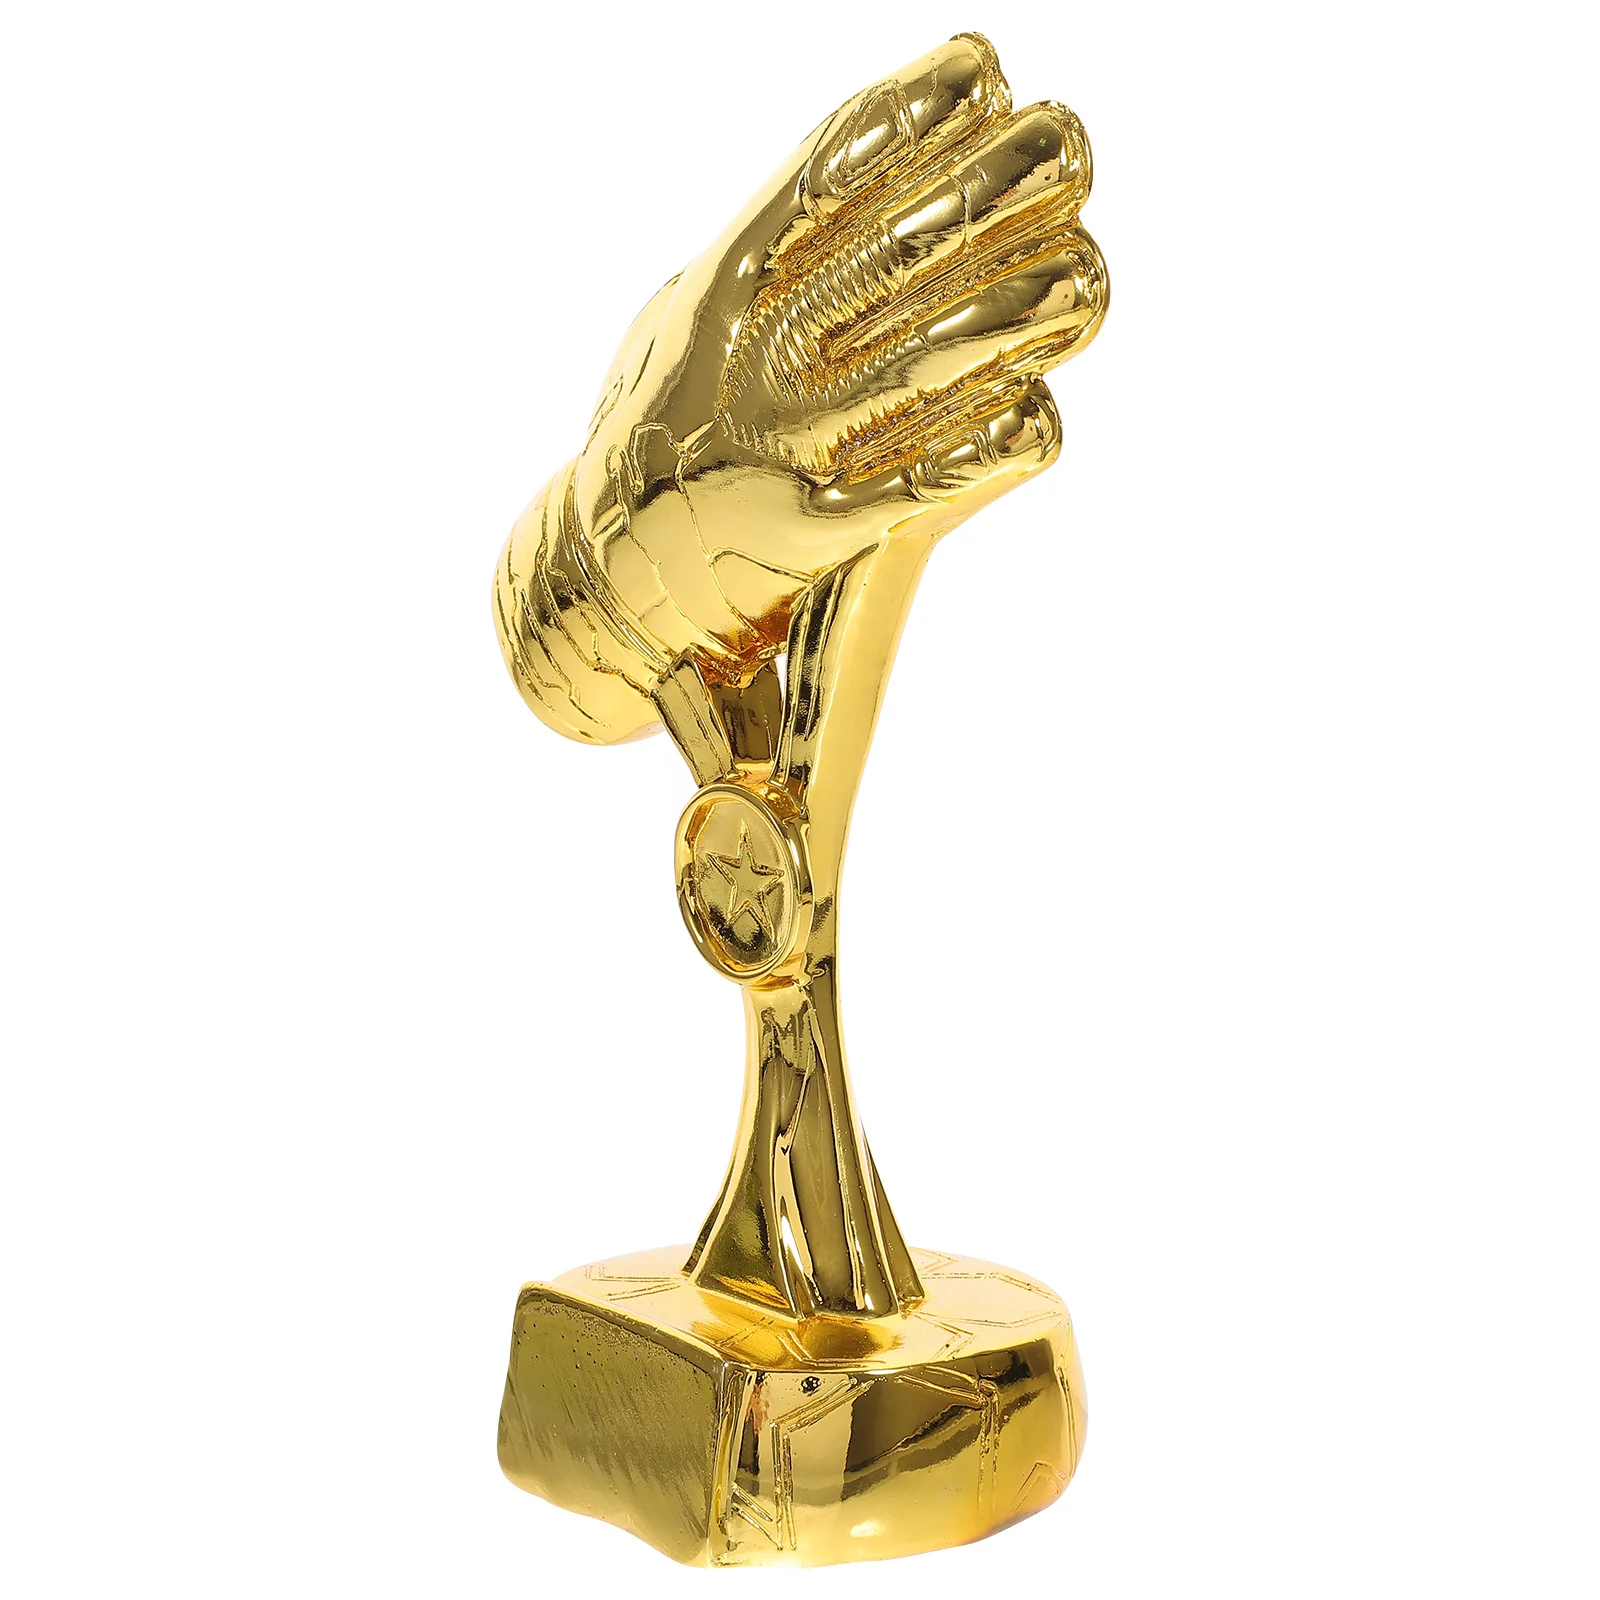 Soccer Goalkeeper Trophy Cup Soccer Trophy Model Resin Football Match Award Cup Goalkeeper Gift Souvenirs